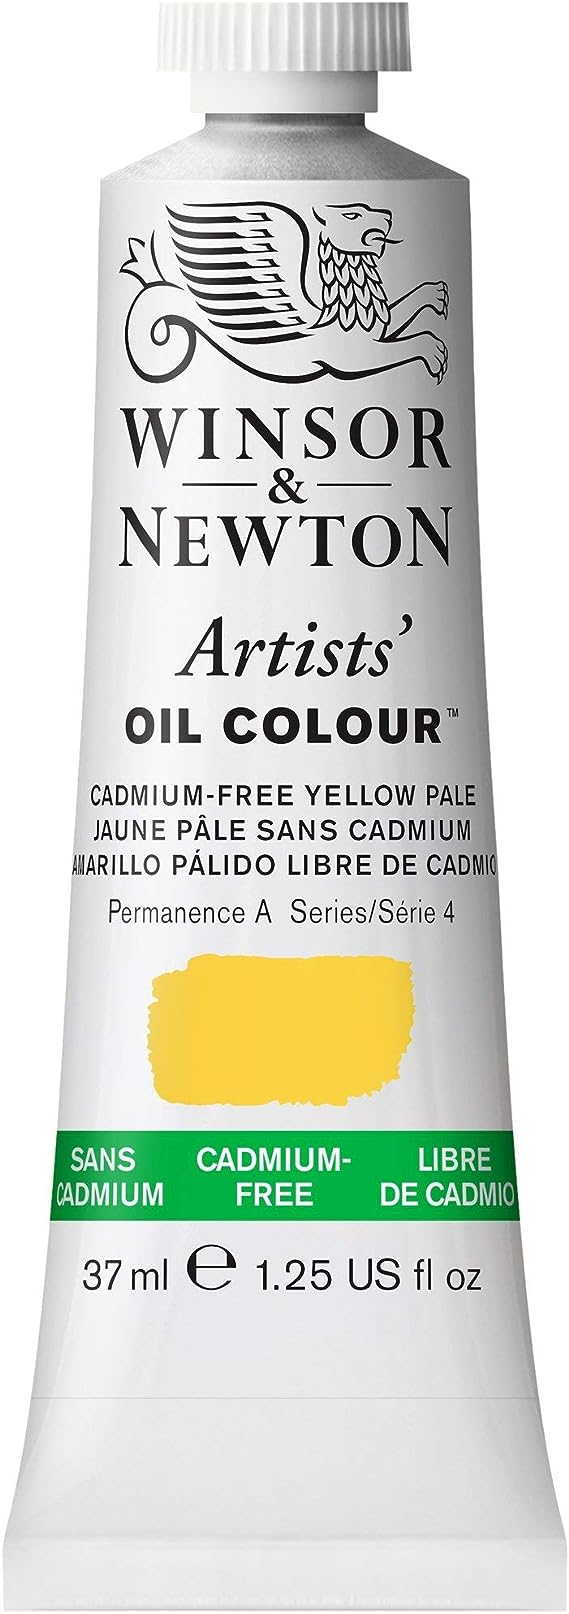 Pintura Oleo Winsor & Newton Artist 37ml S-4 Color A Escoger - MarchanteMX